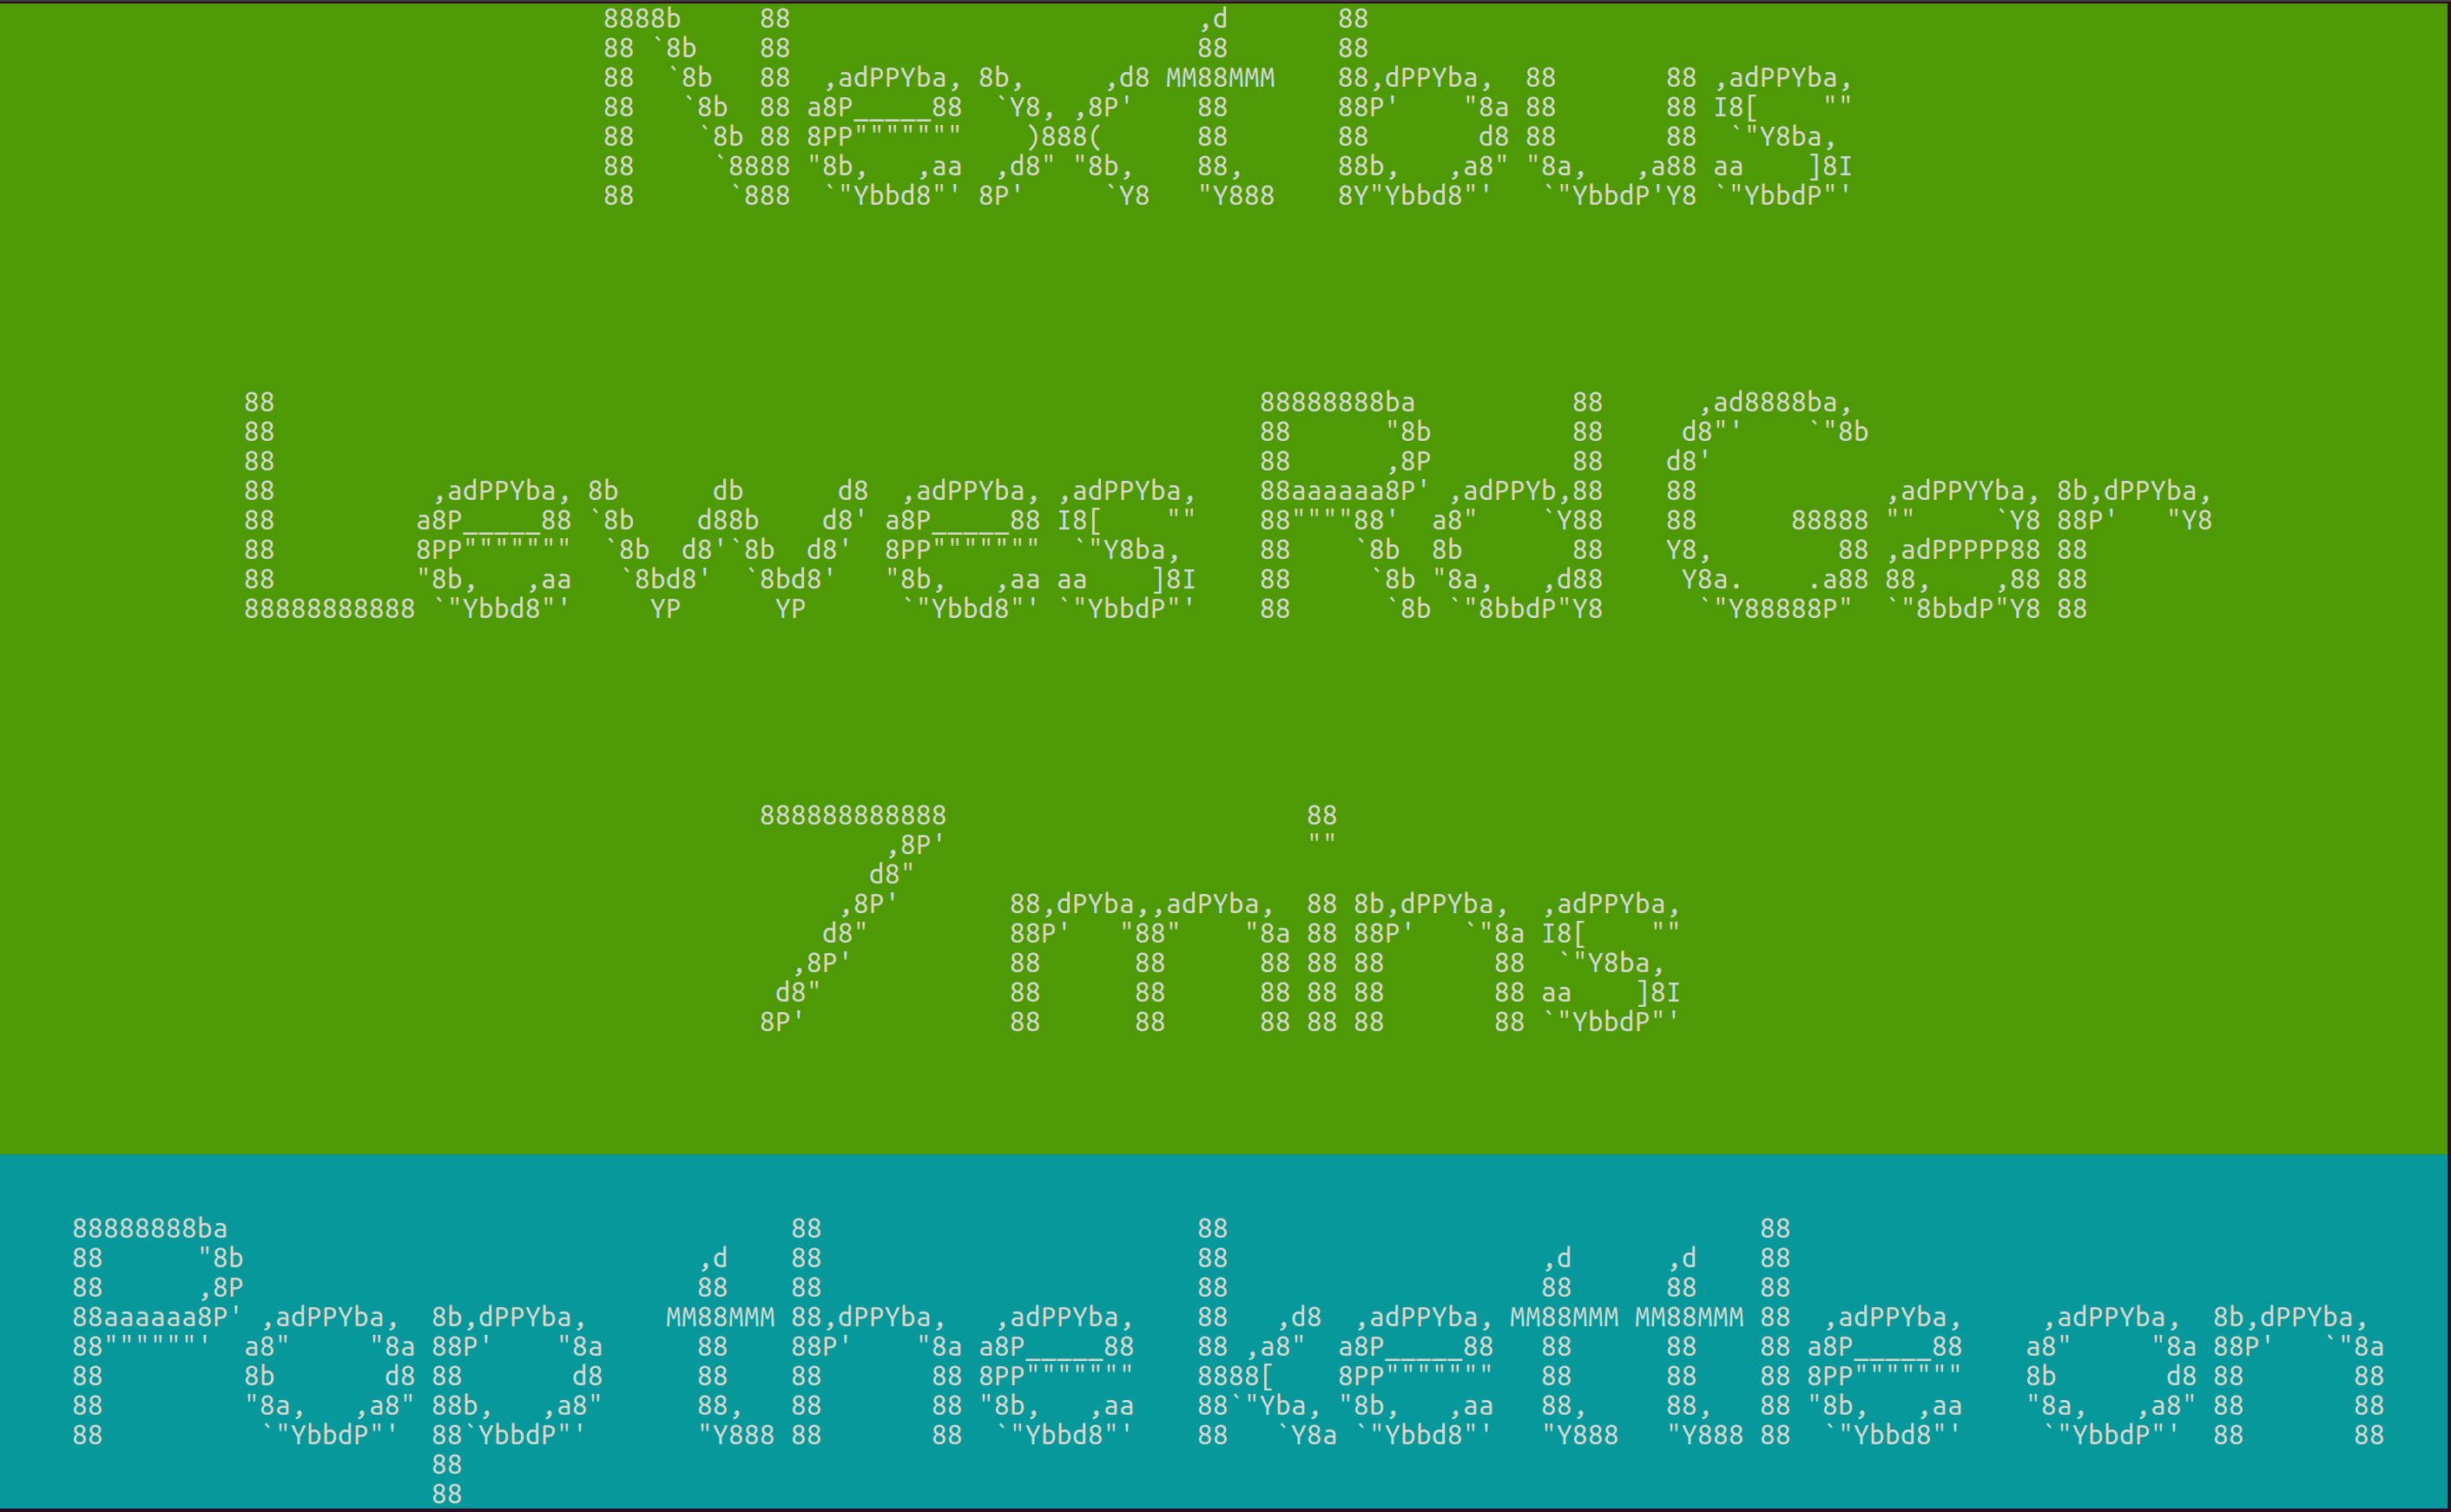 Bus Time Display